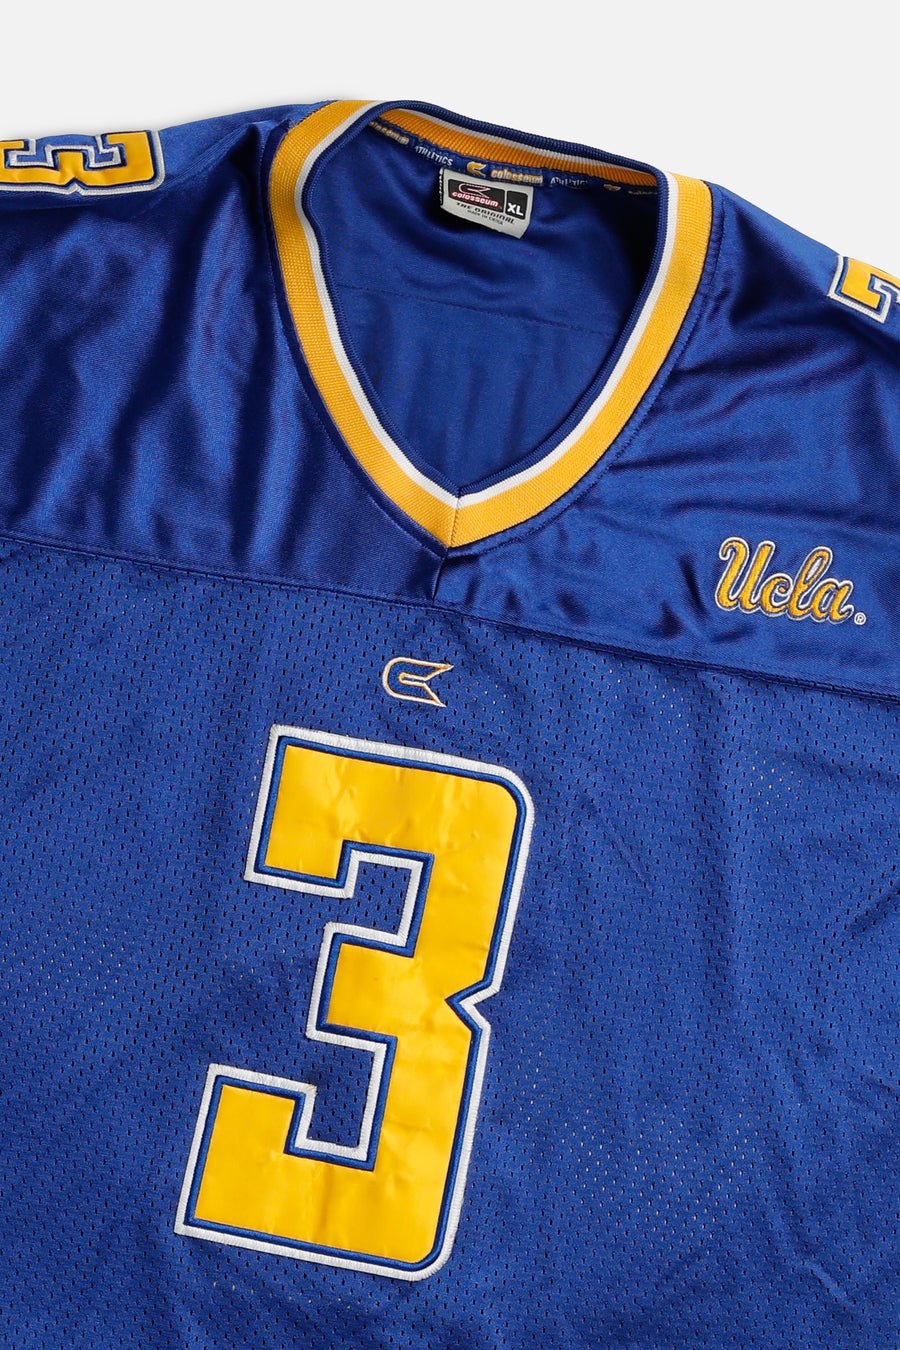 Vintage UCLA Football Jersey - XL